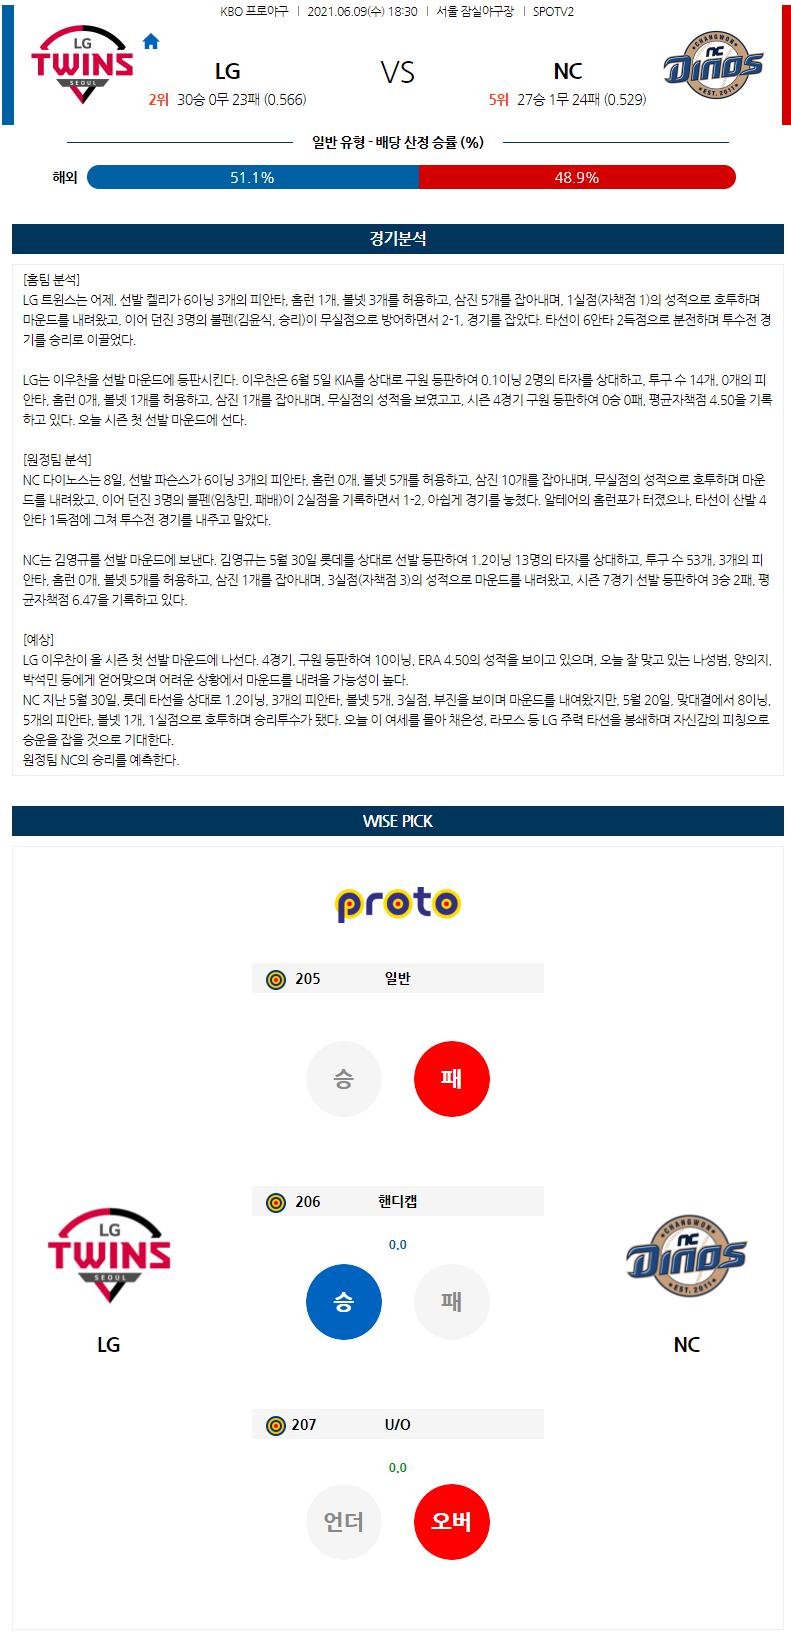 【KBO】 6월 9일 LG vs NC 한국야구분석 한국야구중계 무료야구중계.png